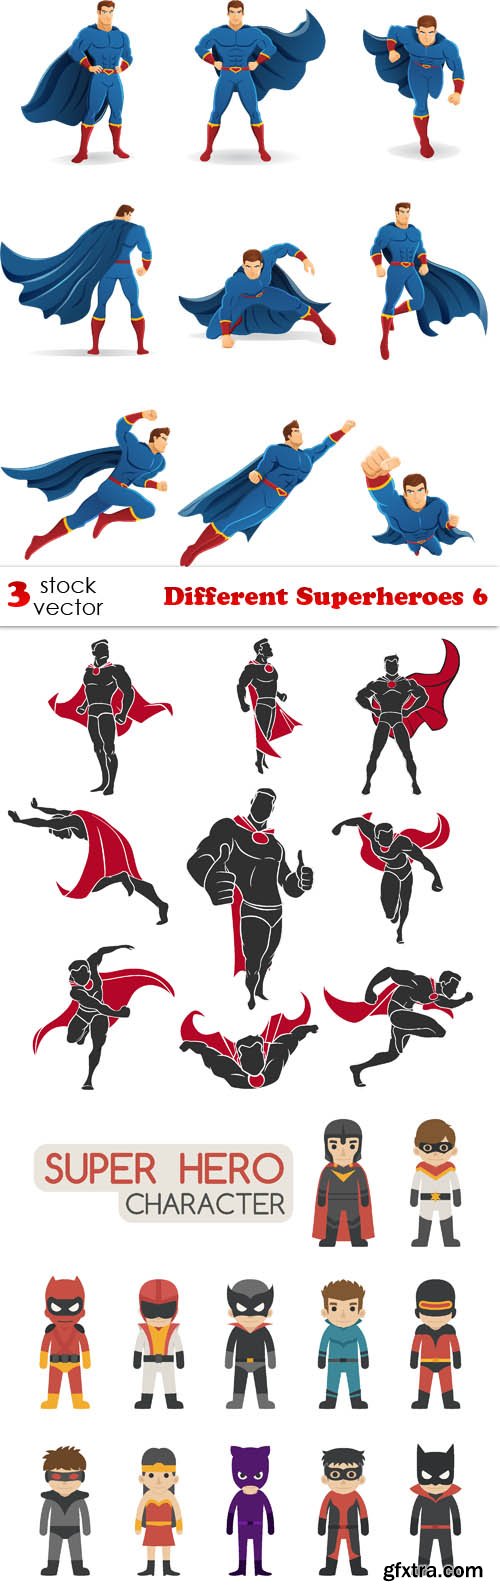 Vectors - Different Superheroes 6